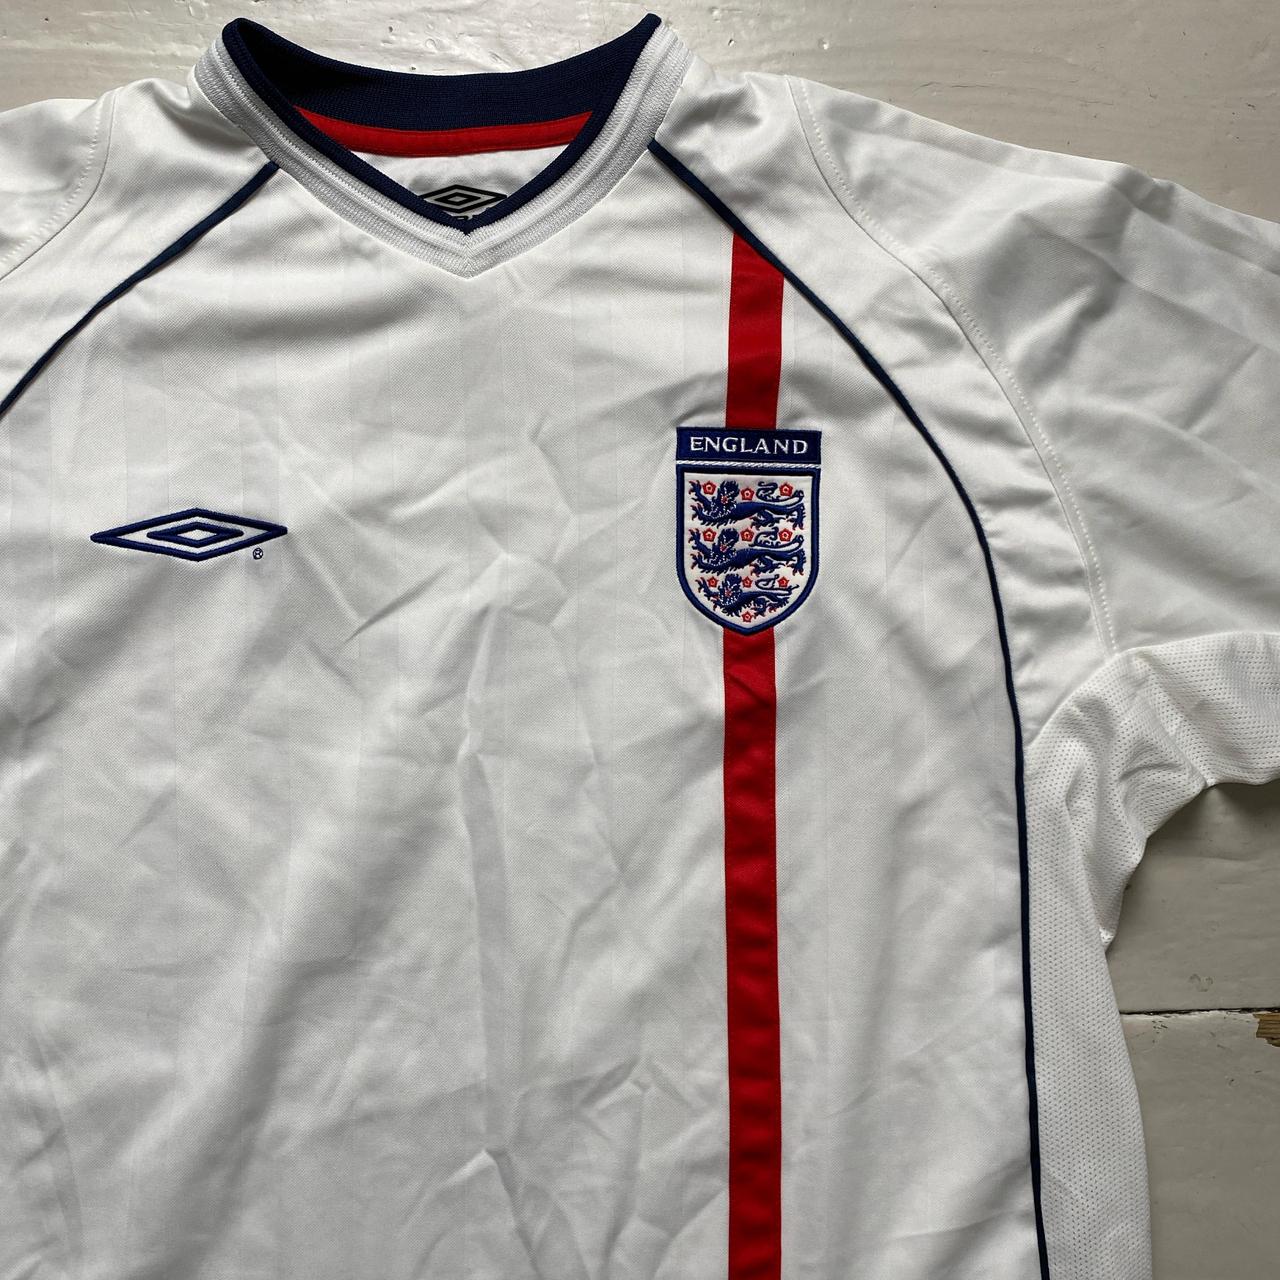 England Vintage Football Jersey White